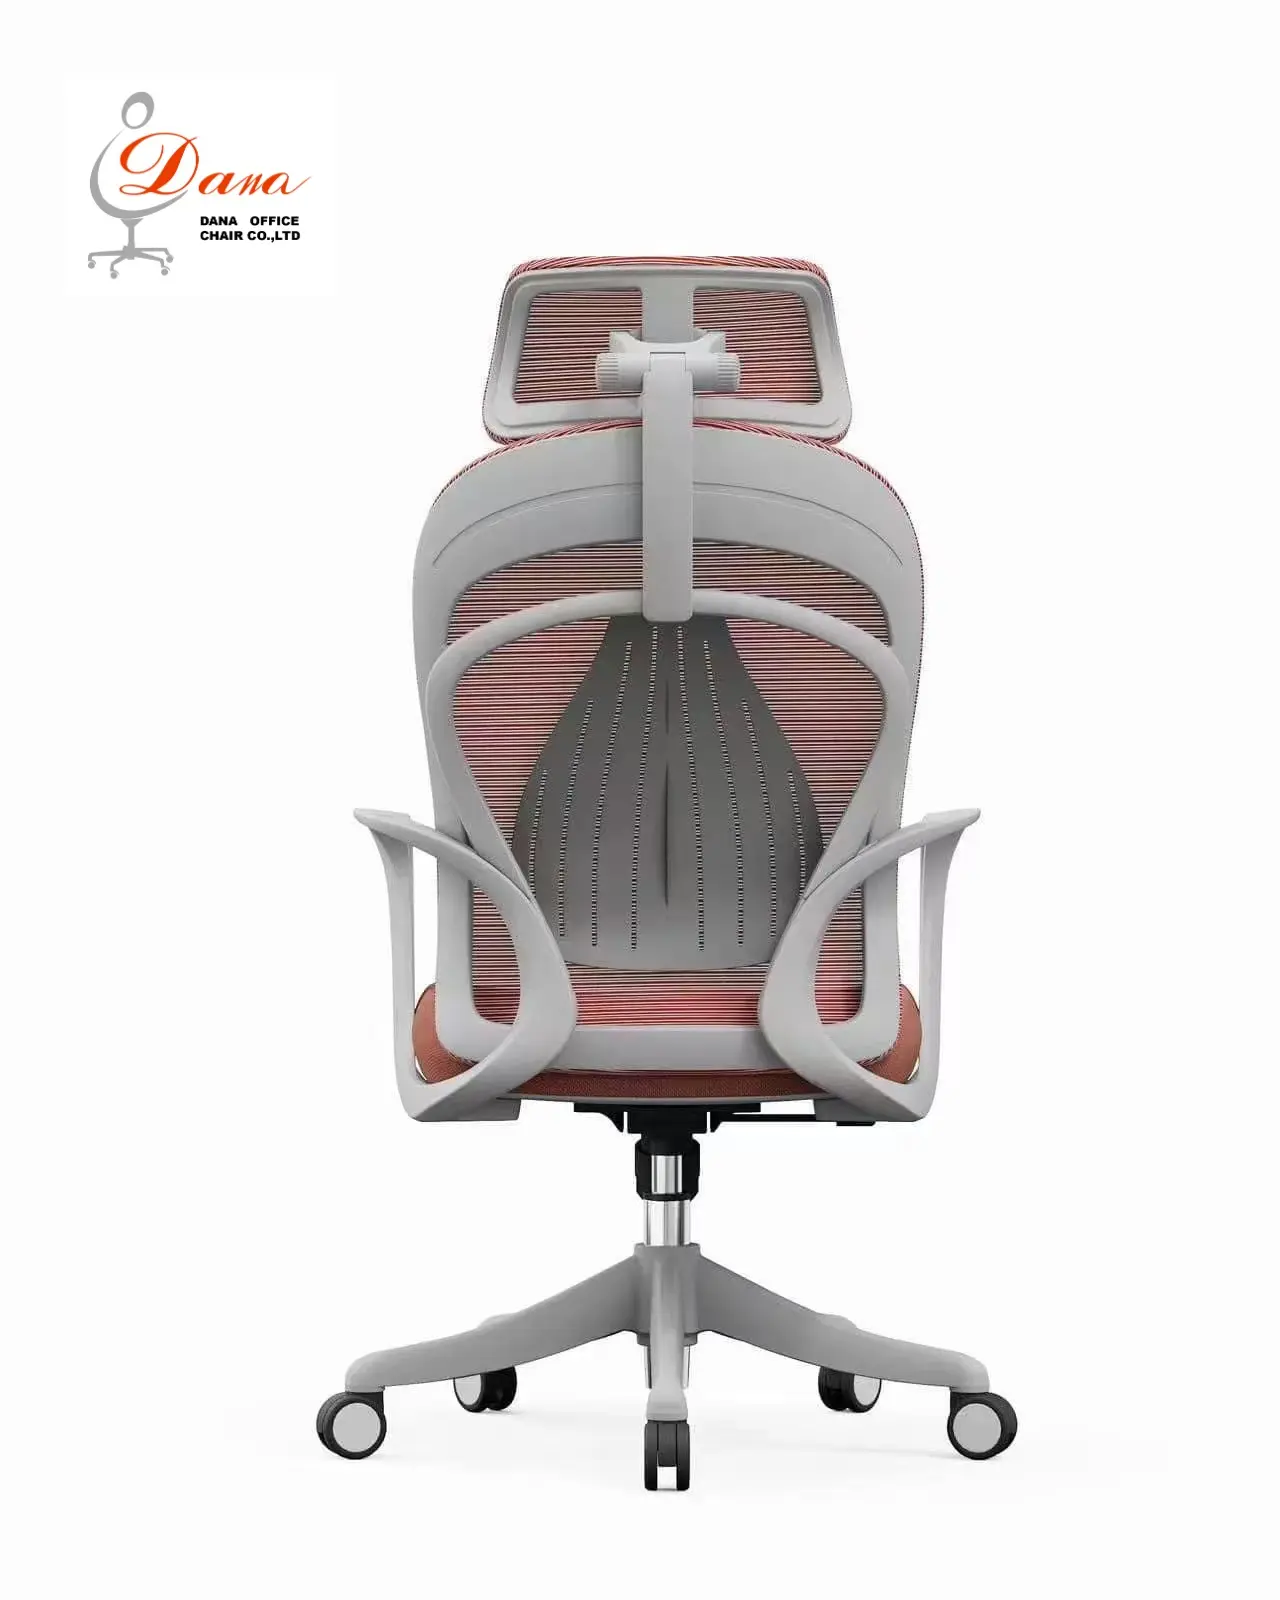 Dana Guangdong kota foshan kursi produsen furnitur kantor membuat promosi penjualan panas furnitur kursi kantor